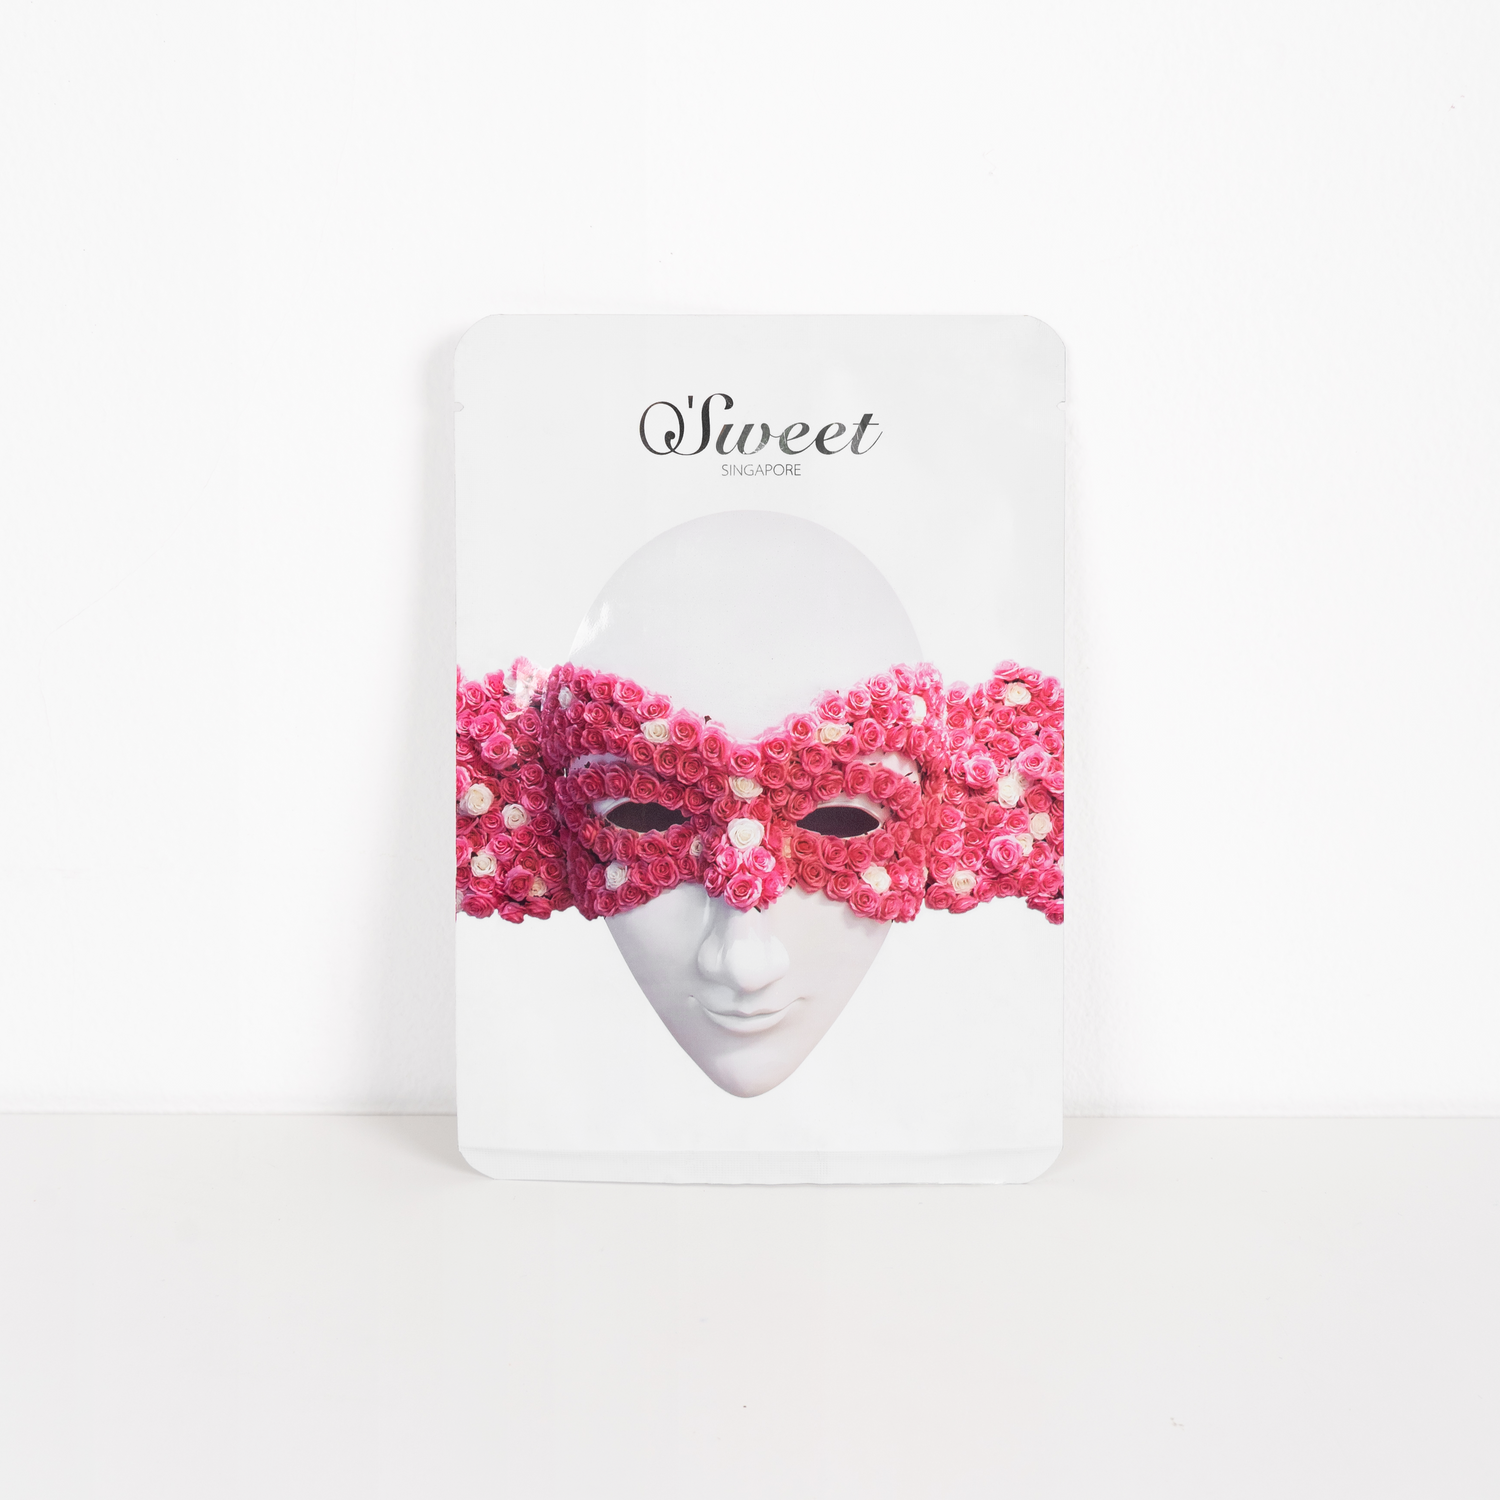 OSWEET Rose Essence Brightening Mask